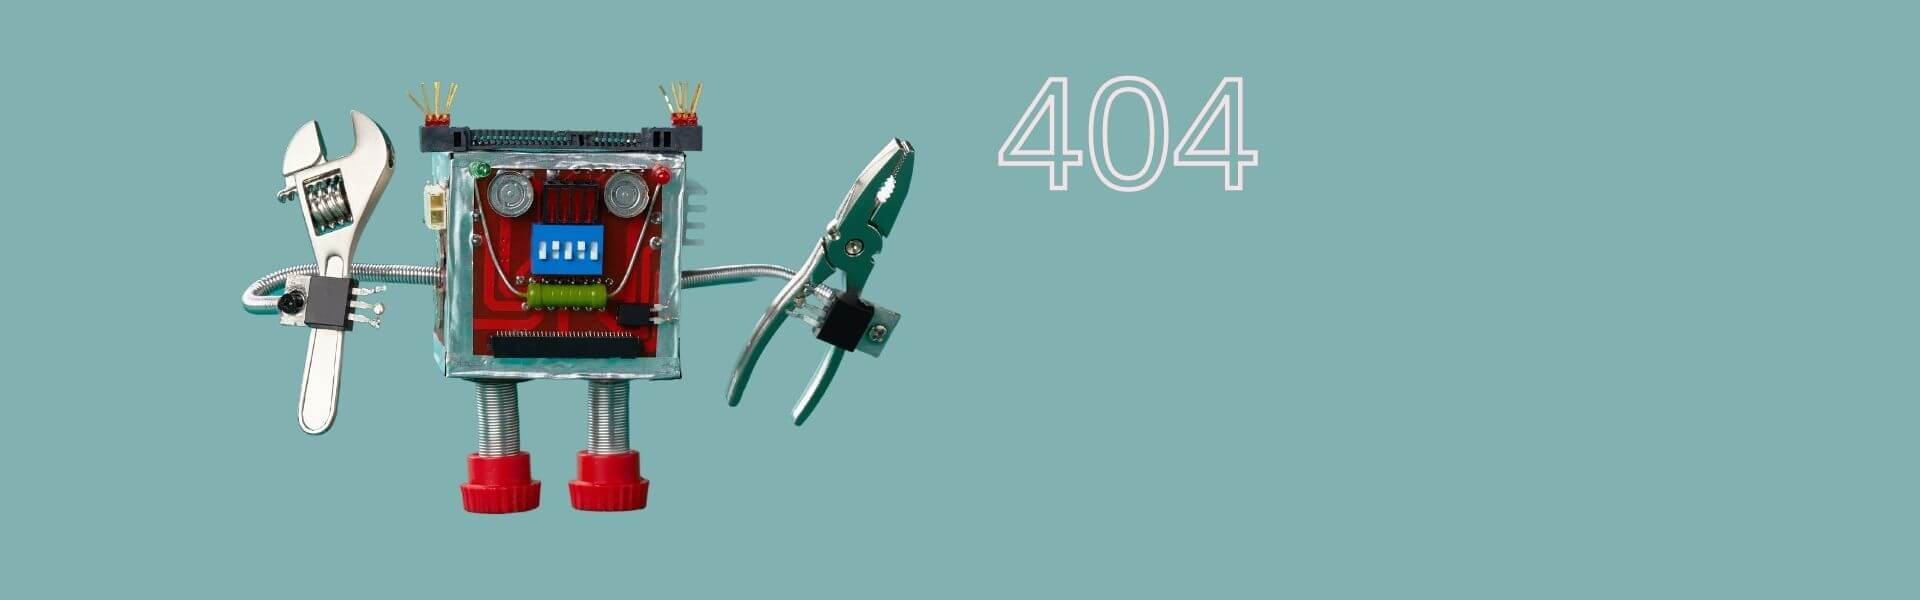 404 Seite